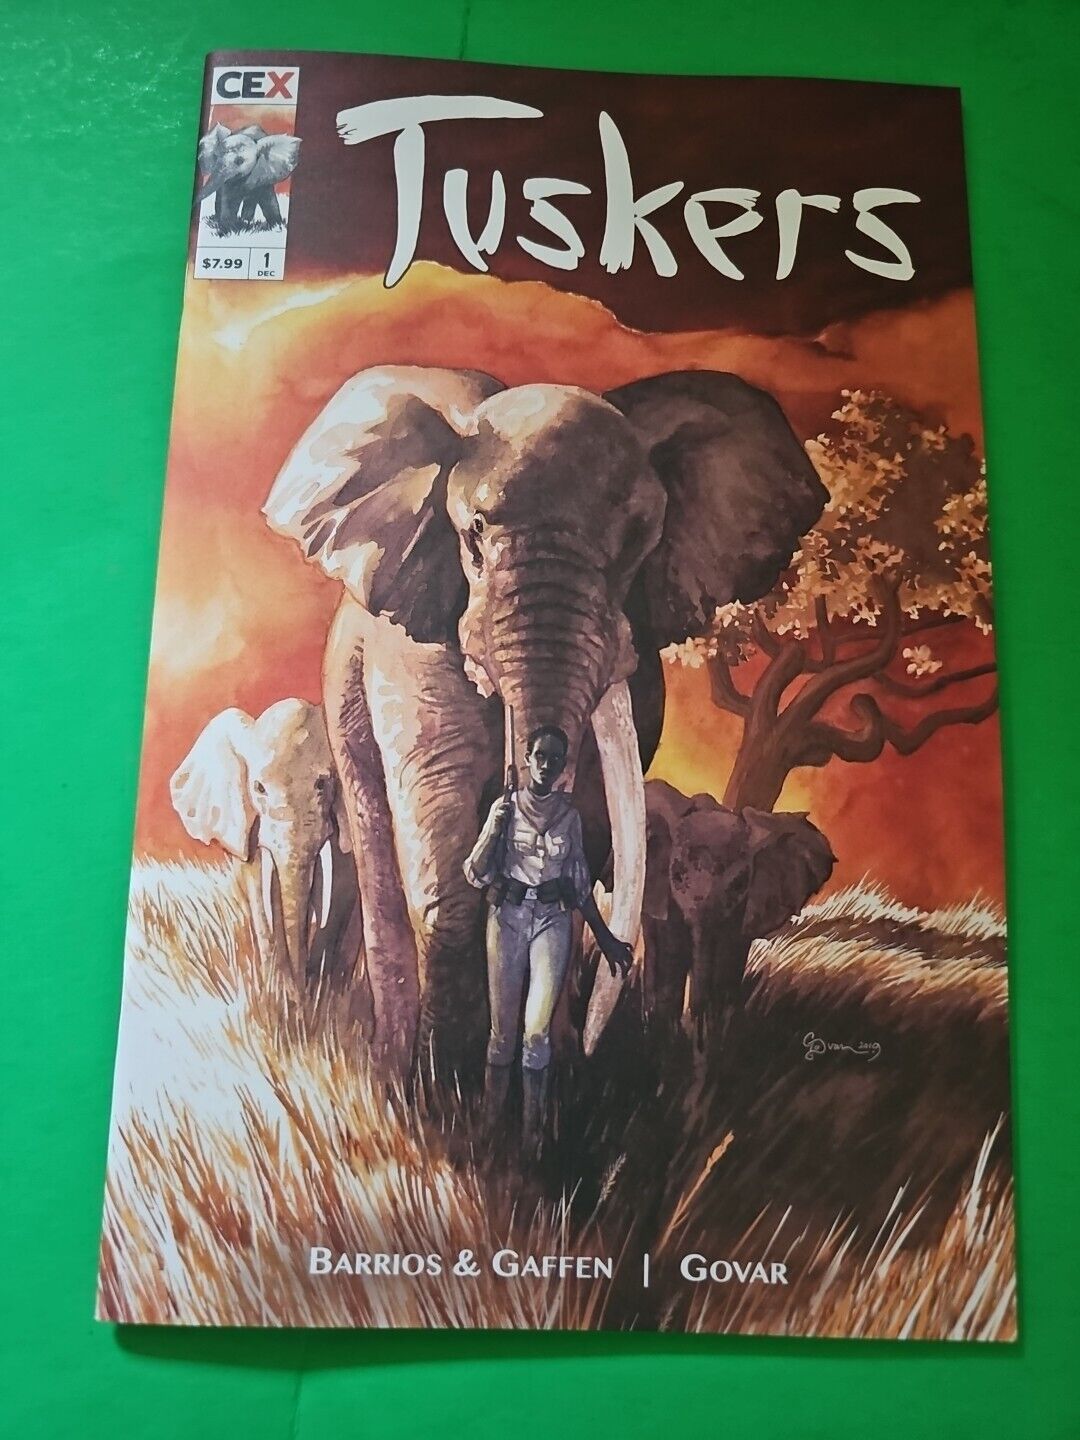 Save The Elephants - Tuskers 1 Daniel Govar NM (I show the guts - See pics)